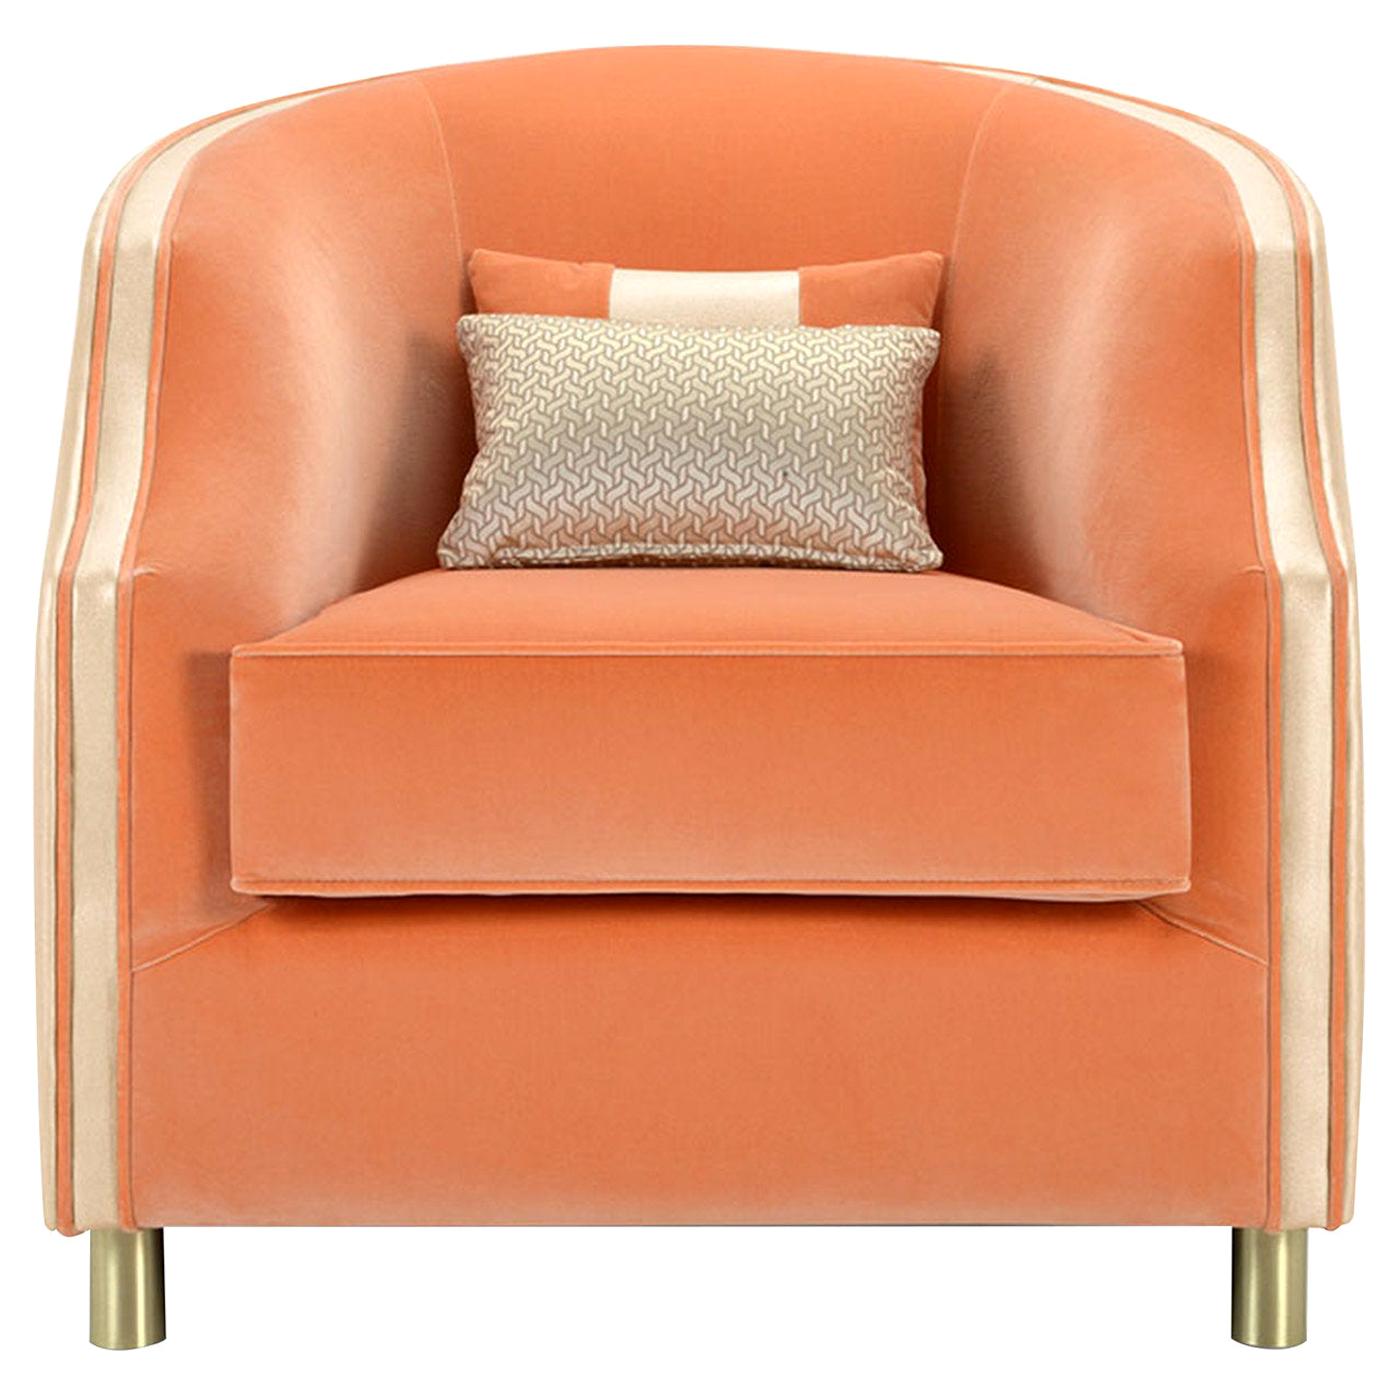 Cleio Small Orange Armchair